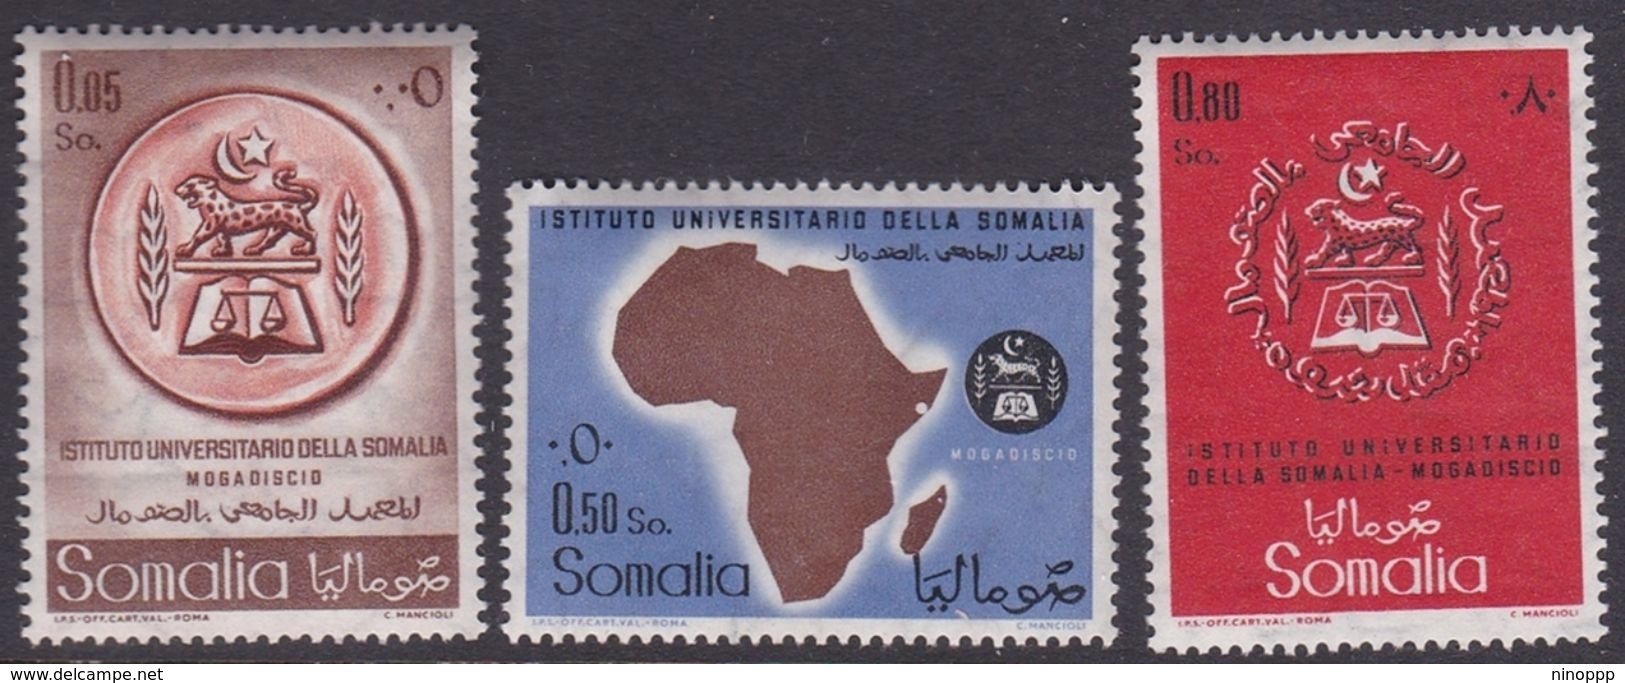 Somalia Scott 236-238 1960 University Institute Inauguration, Mint Never Hinged - Somalia (AFIS)